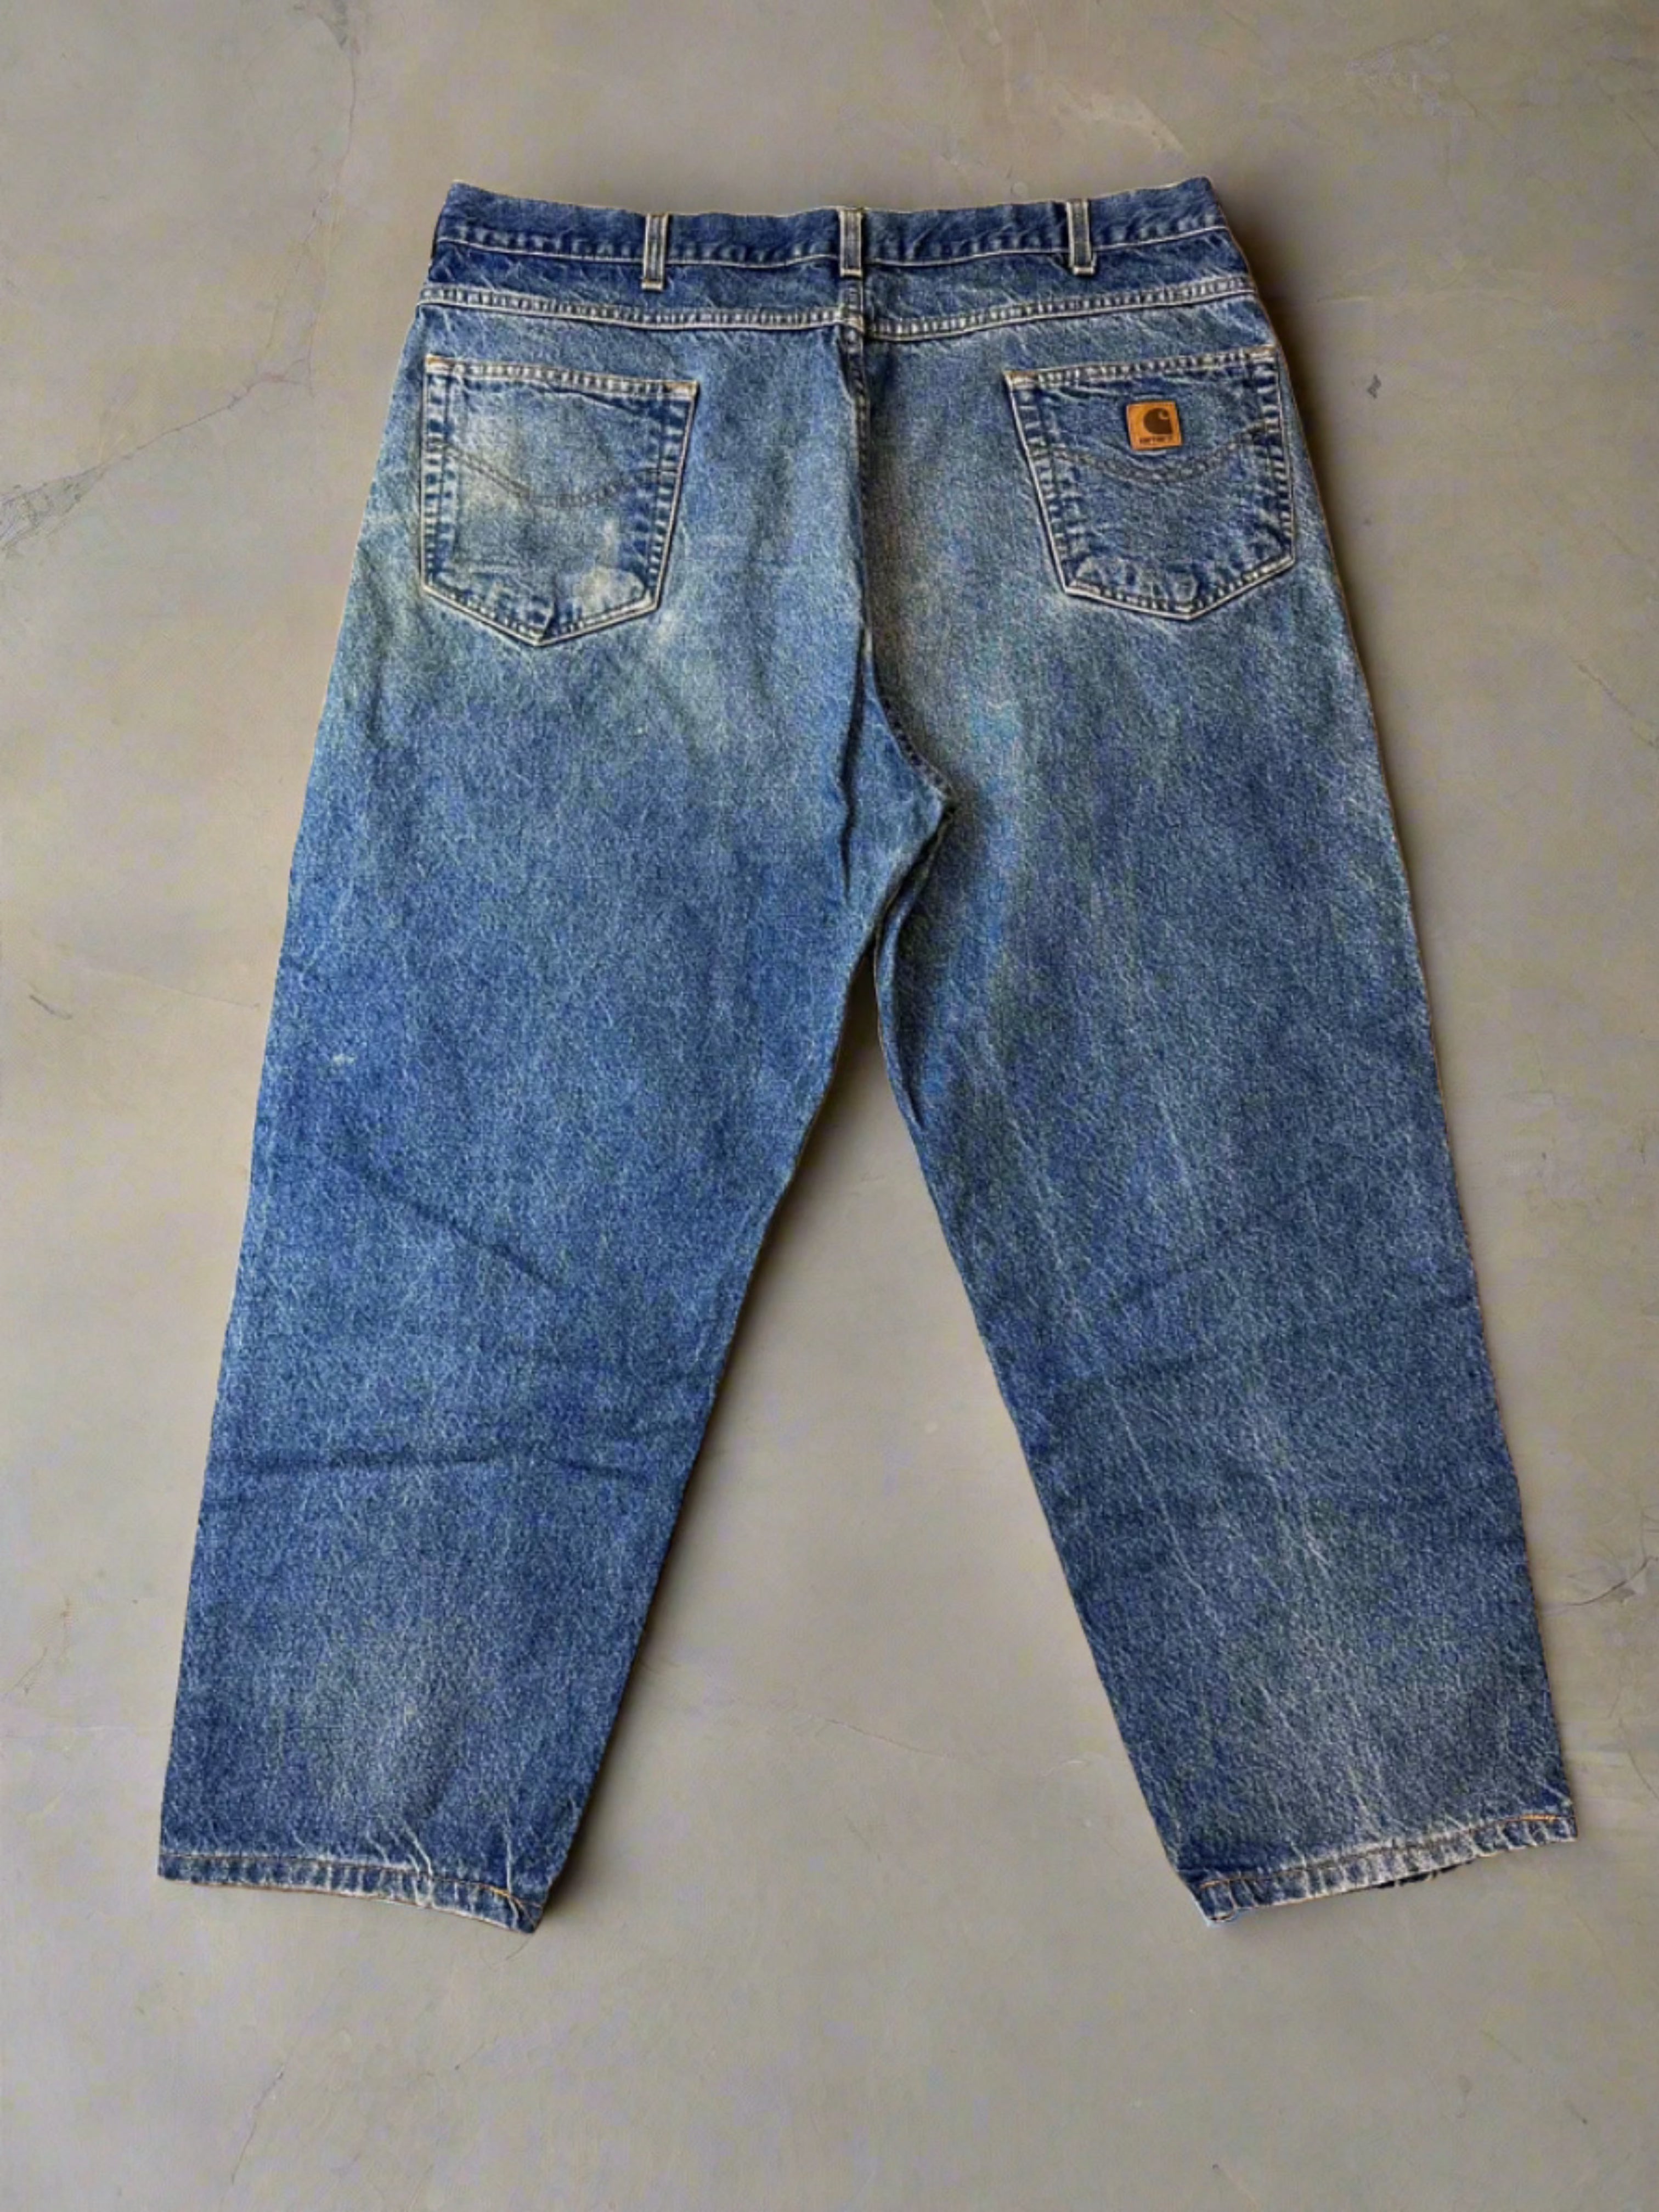 Vintage Carhartt Denim Pants - size 42x30